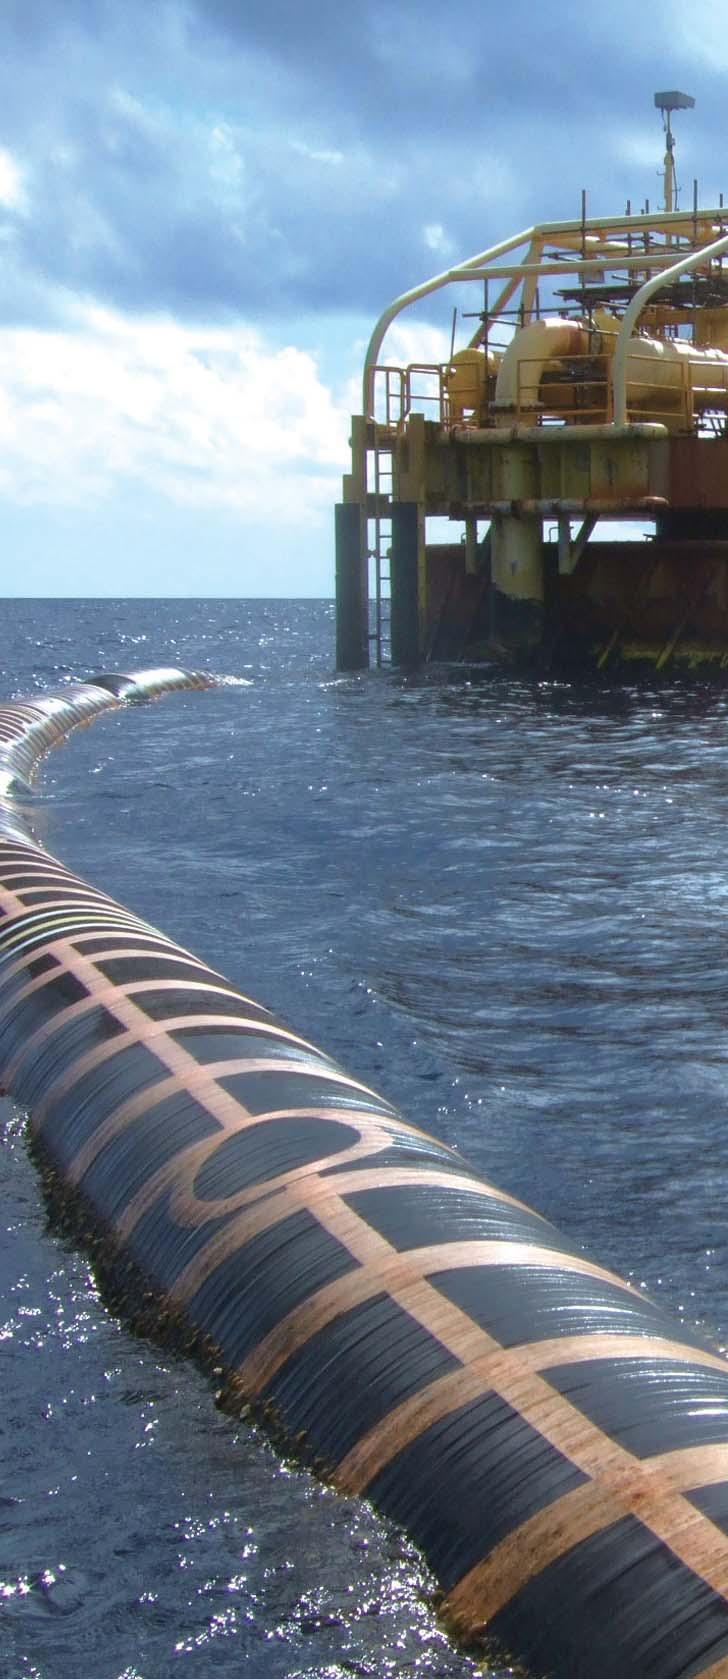 Seaflex marine hoses are designed